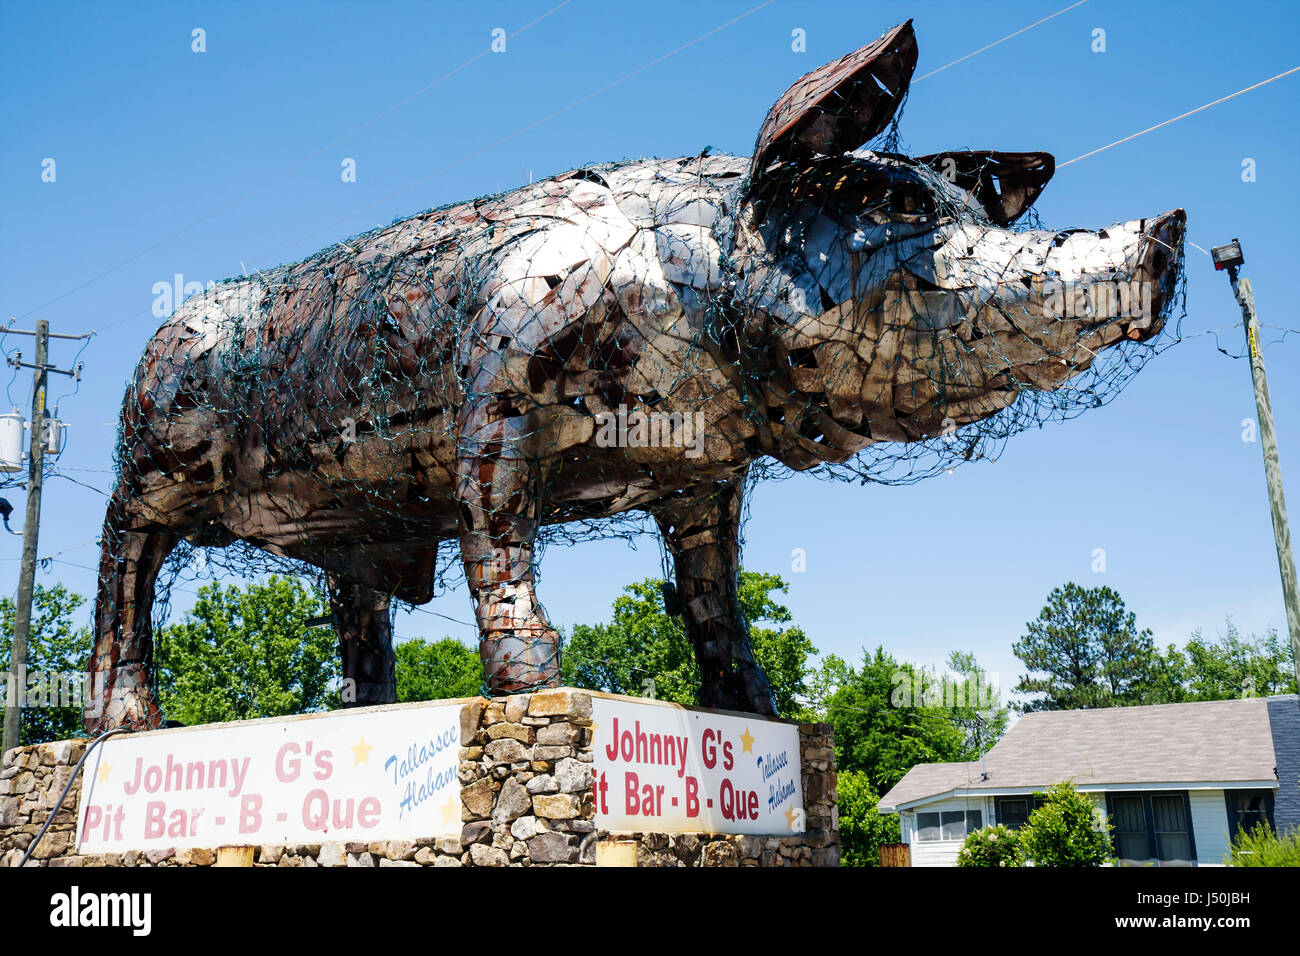 Alabama,Elmore County,Tallassee,Highway 14,Giant metal pig,lugar de interés local,Johnny G's Pit Bar B Queue,restaurante restaurantes, comida, cafés, SER Foto de stock